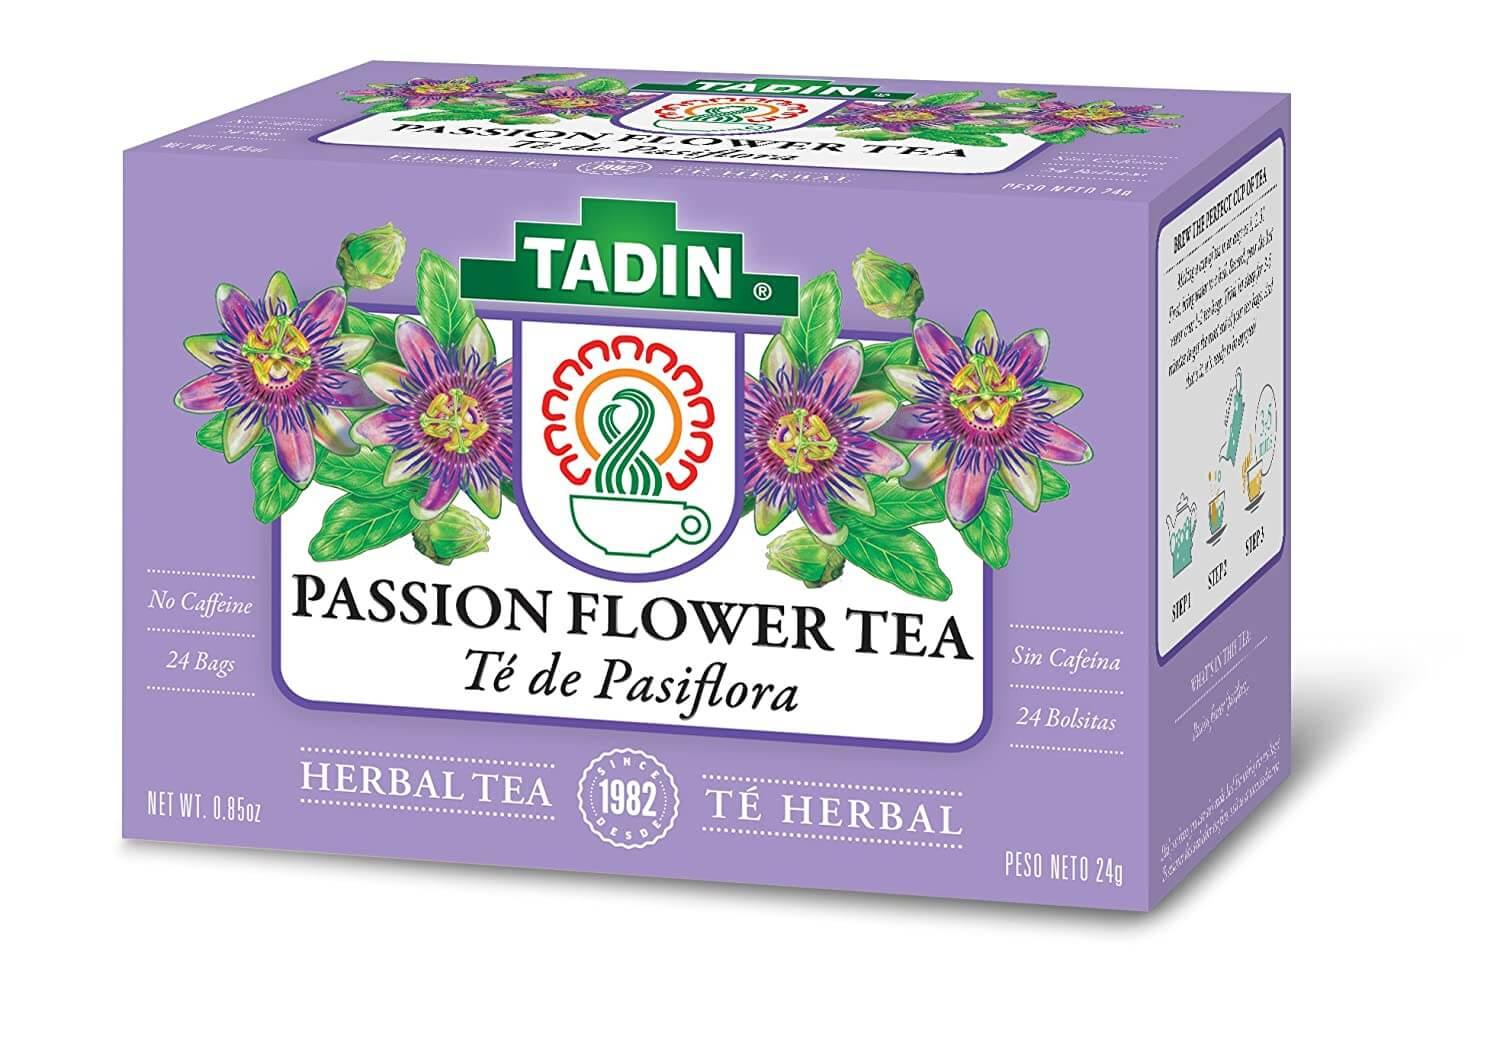 Tadin - Passion Flower Tea 24 Bags